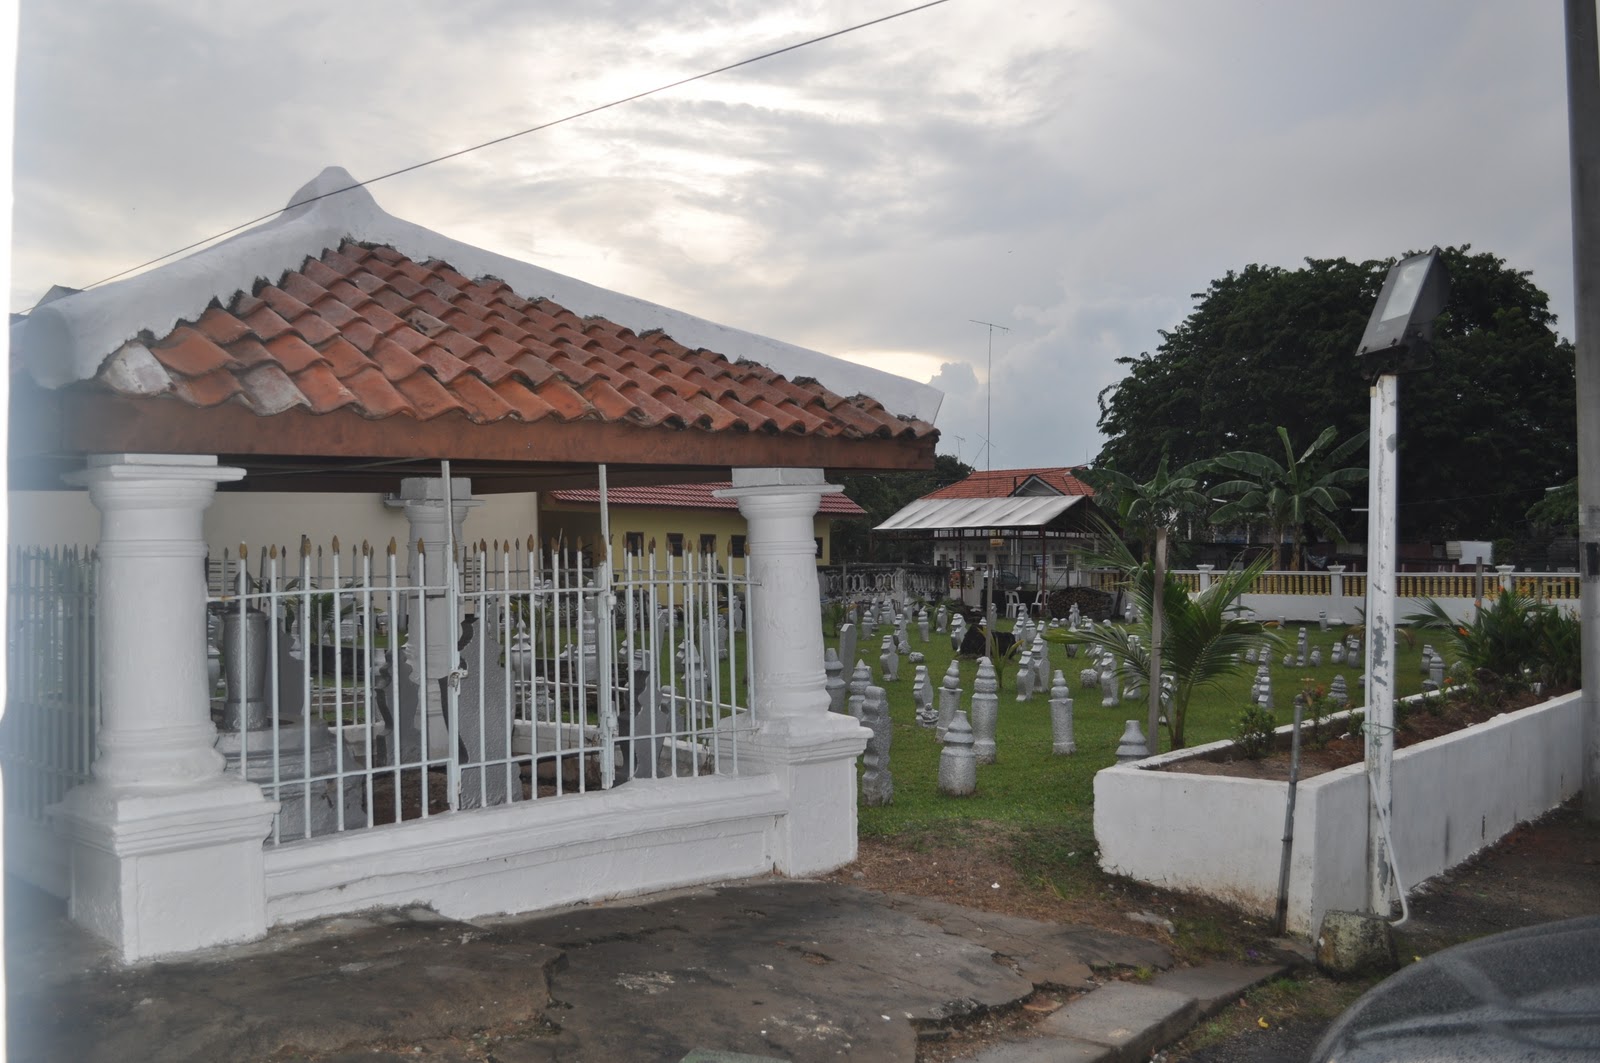 Muhammad Qul Amirul Hakim: Masjid Kampung Hulu, Melaka